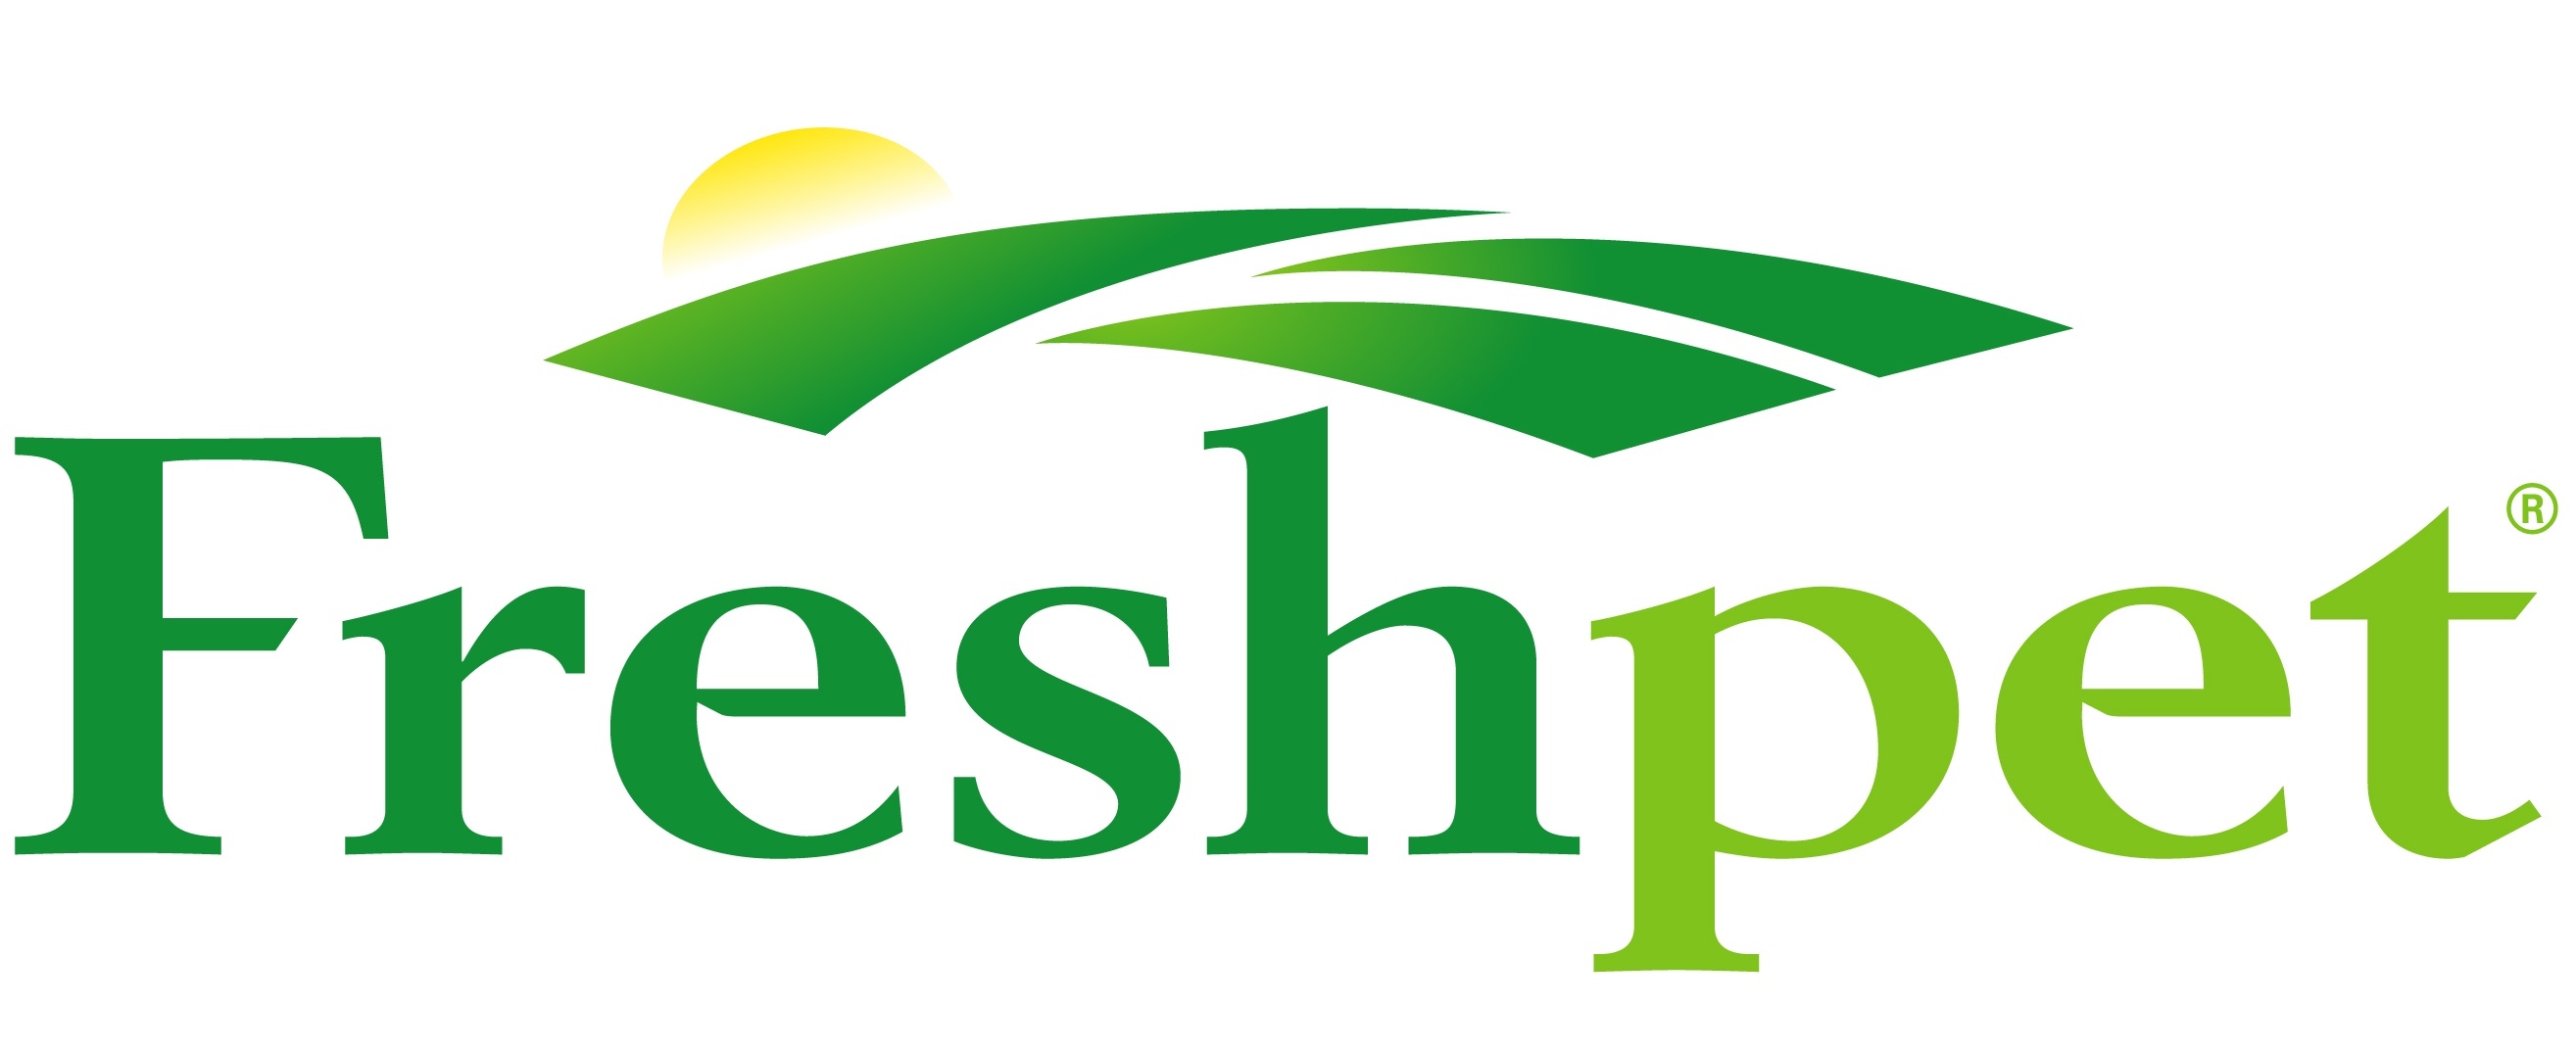 Freshpet logo (1) - Blue Rock Construction, Inc.